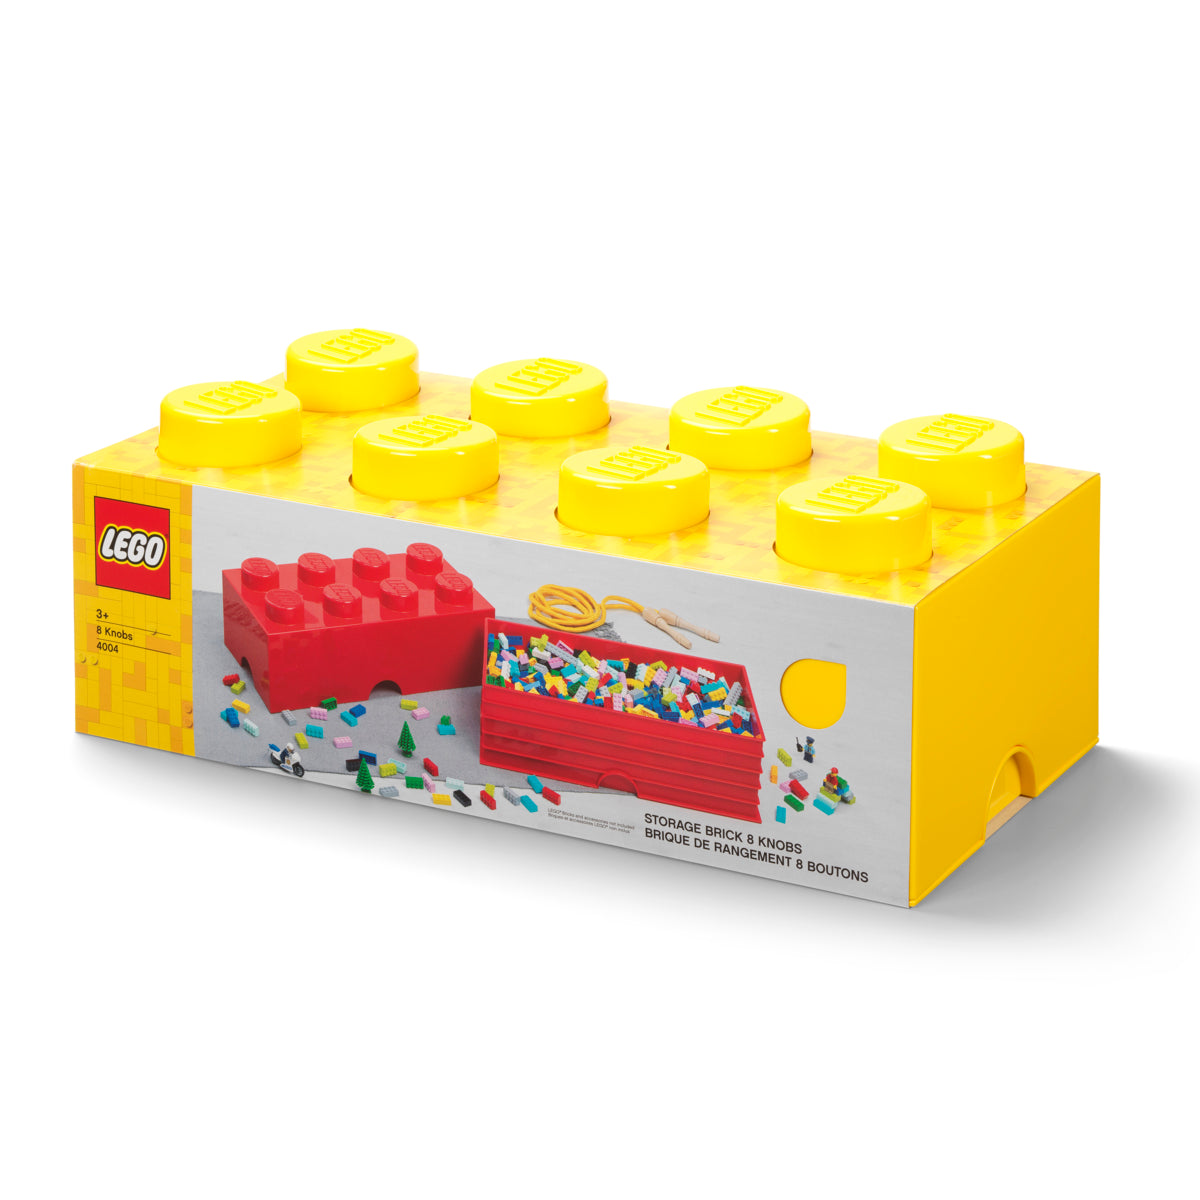 Giant LEGO Brick Storage Box - Medium - Red